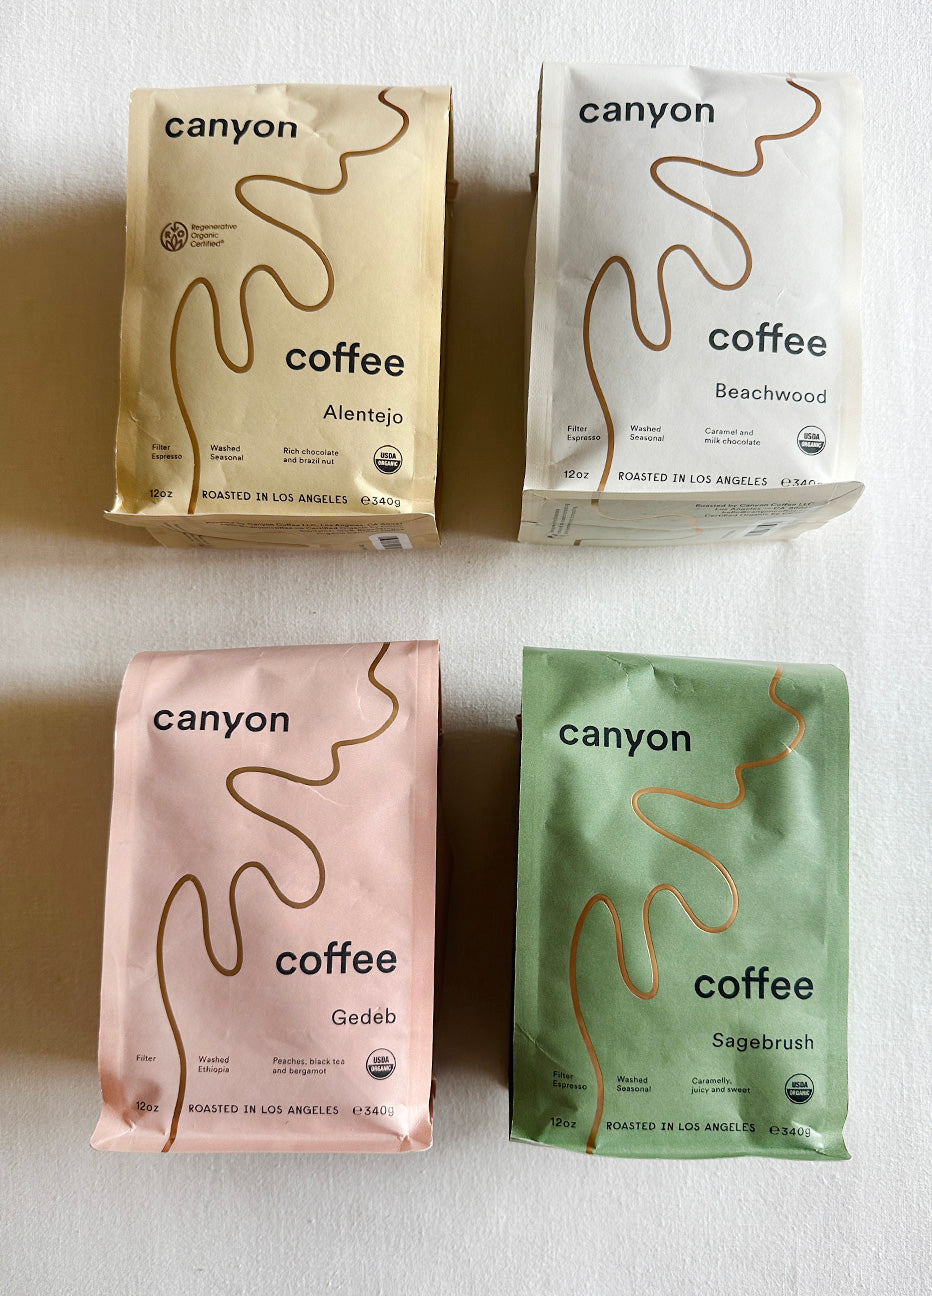 Canyon Coffee